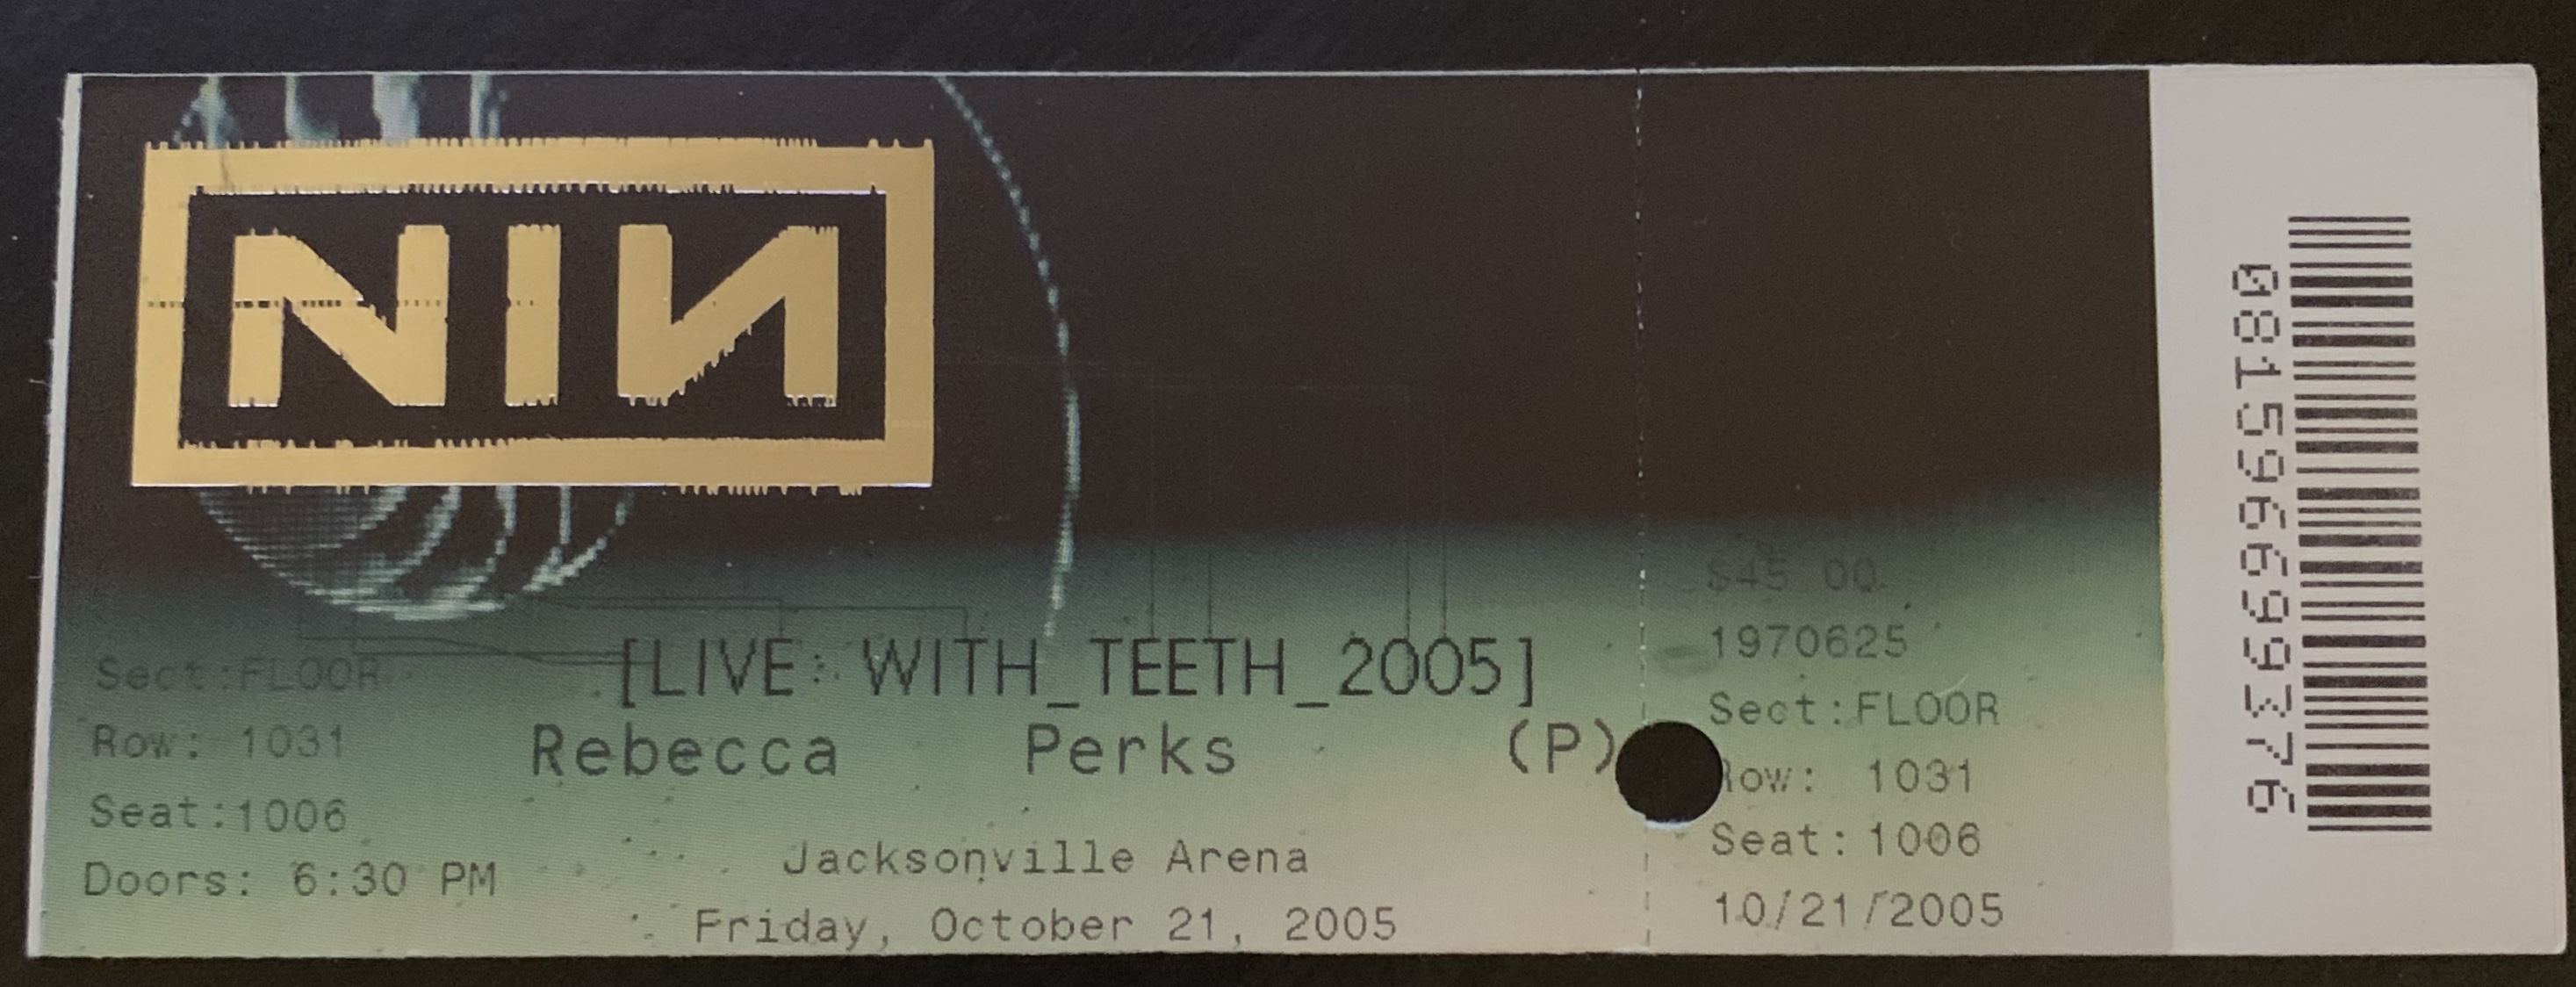 2005/10/21 Ticket